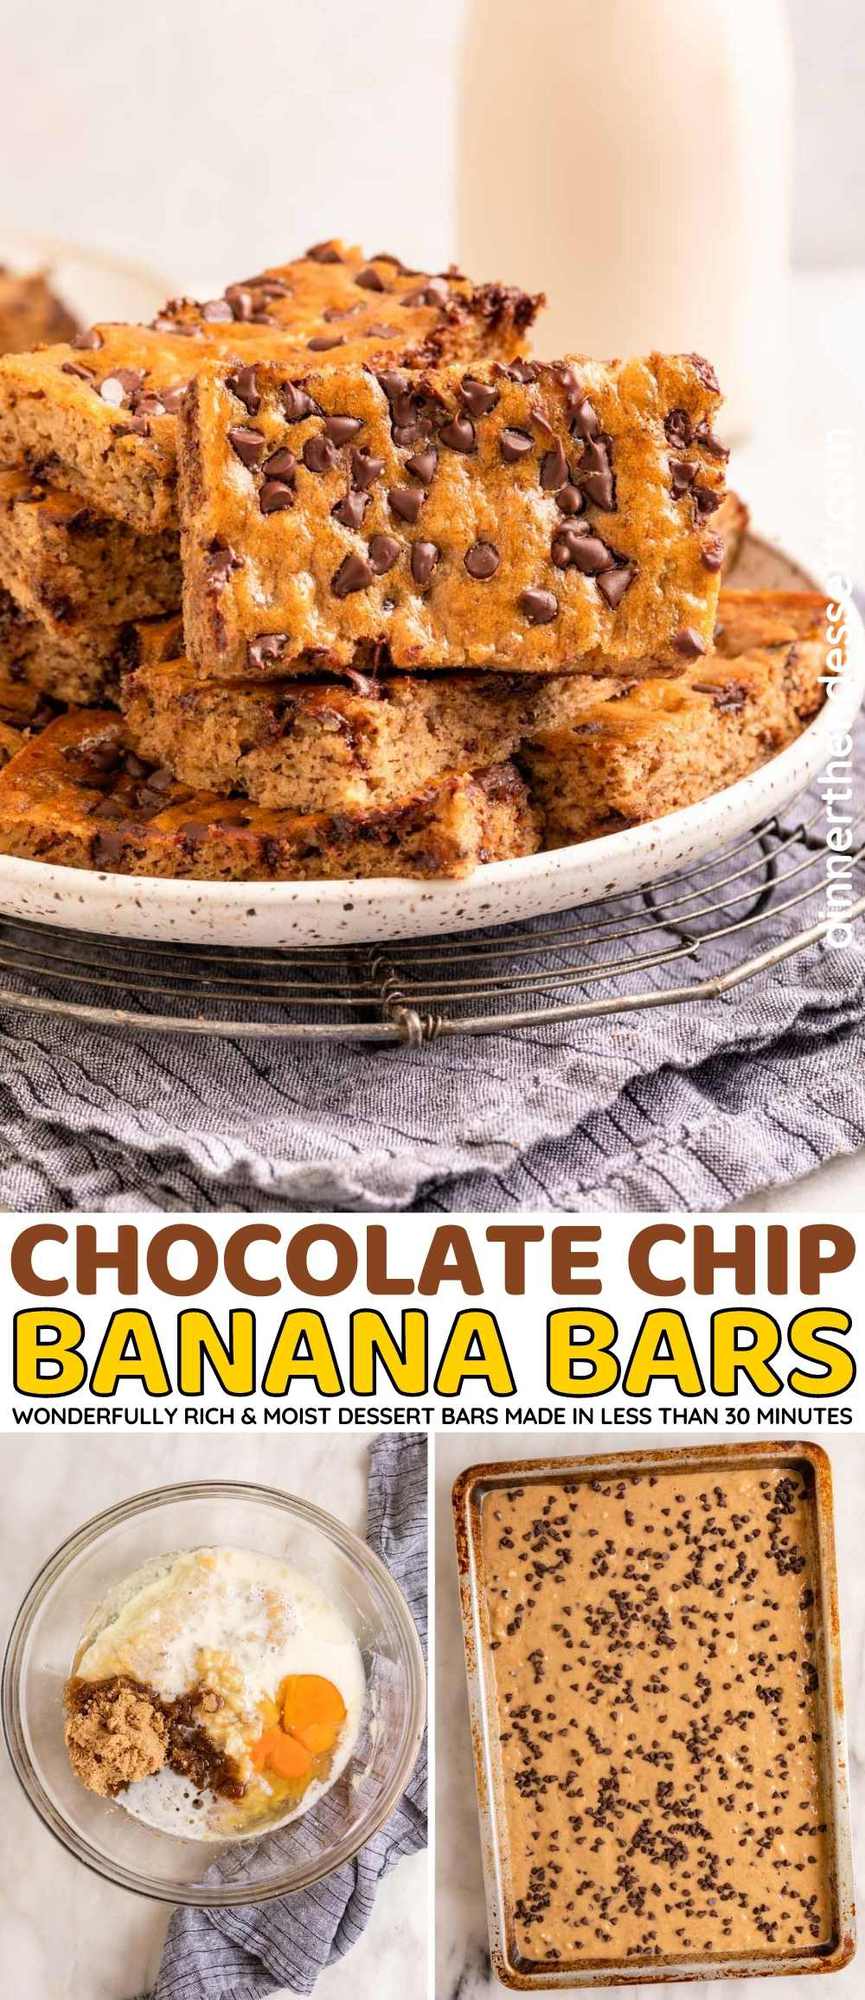 Chocolate Chip Banana Bars collage